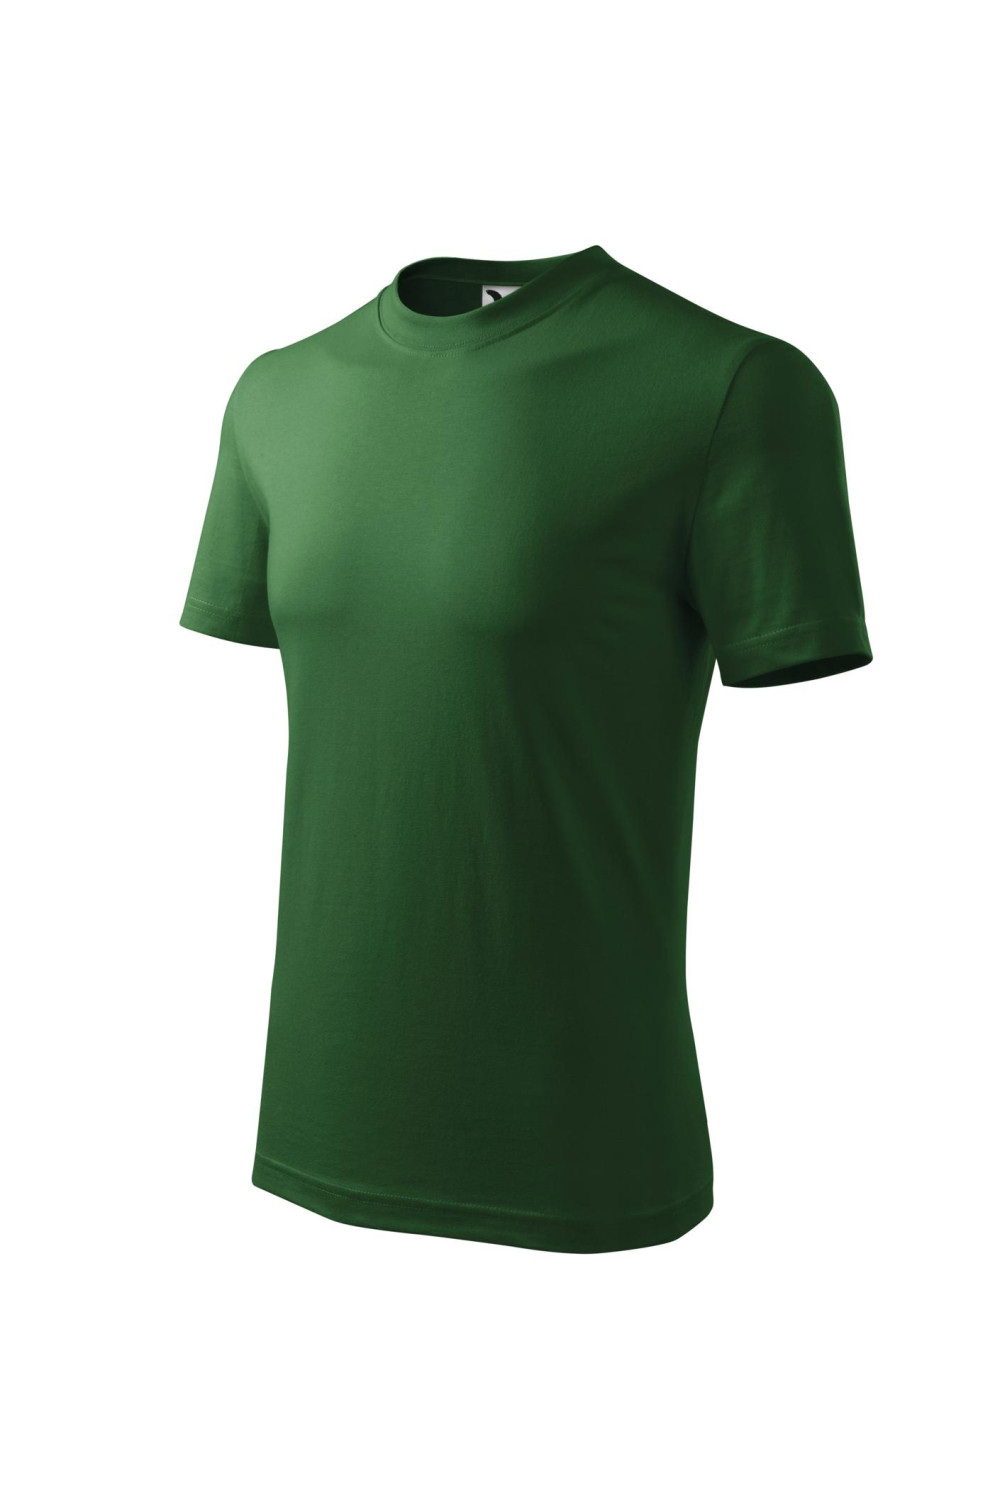 HEAVY 110 MALFINI ADLER Koszulka t-shirt unisex 100% bawełna zieleń butelkowa